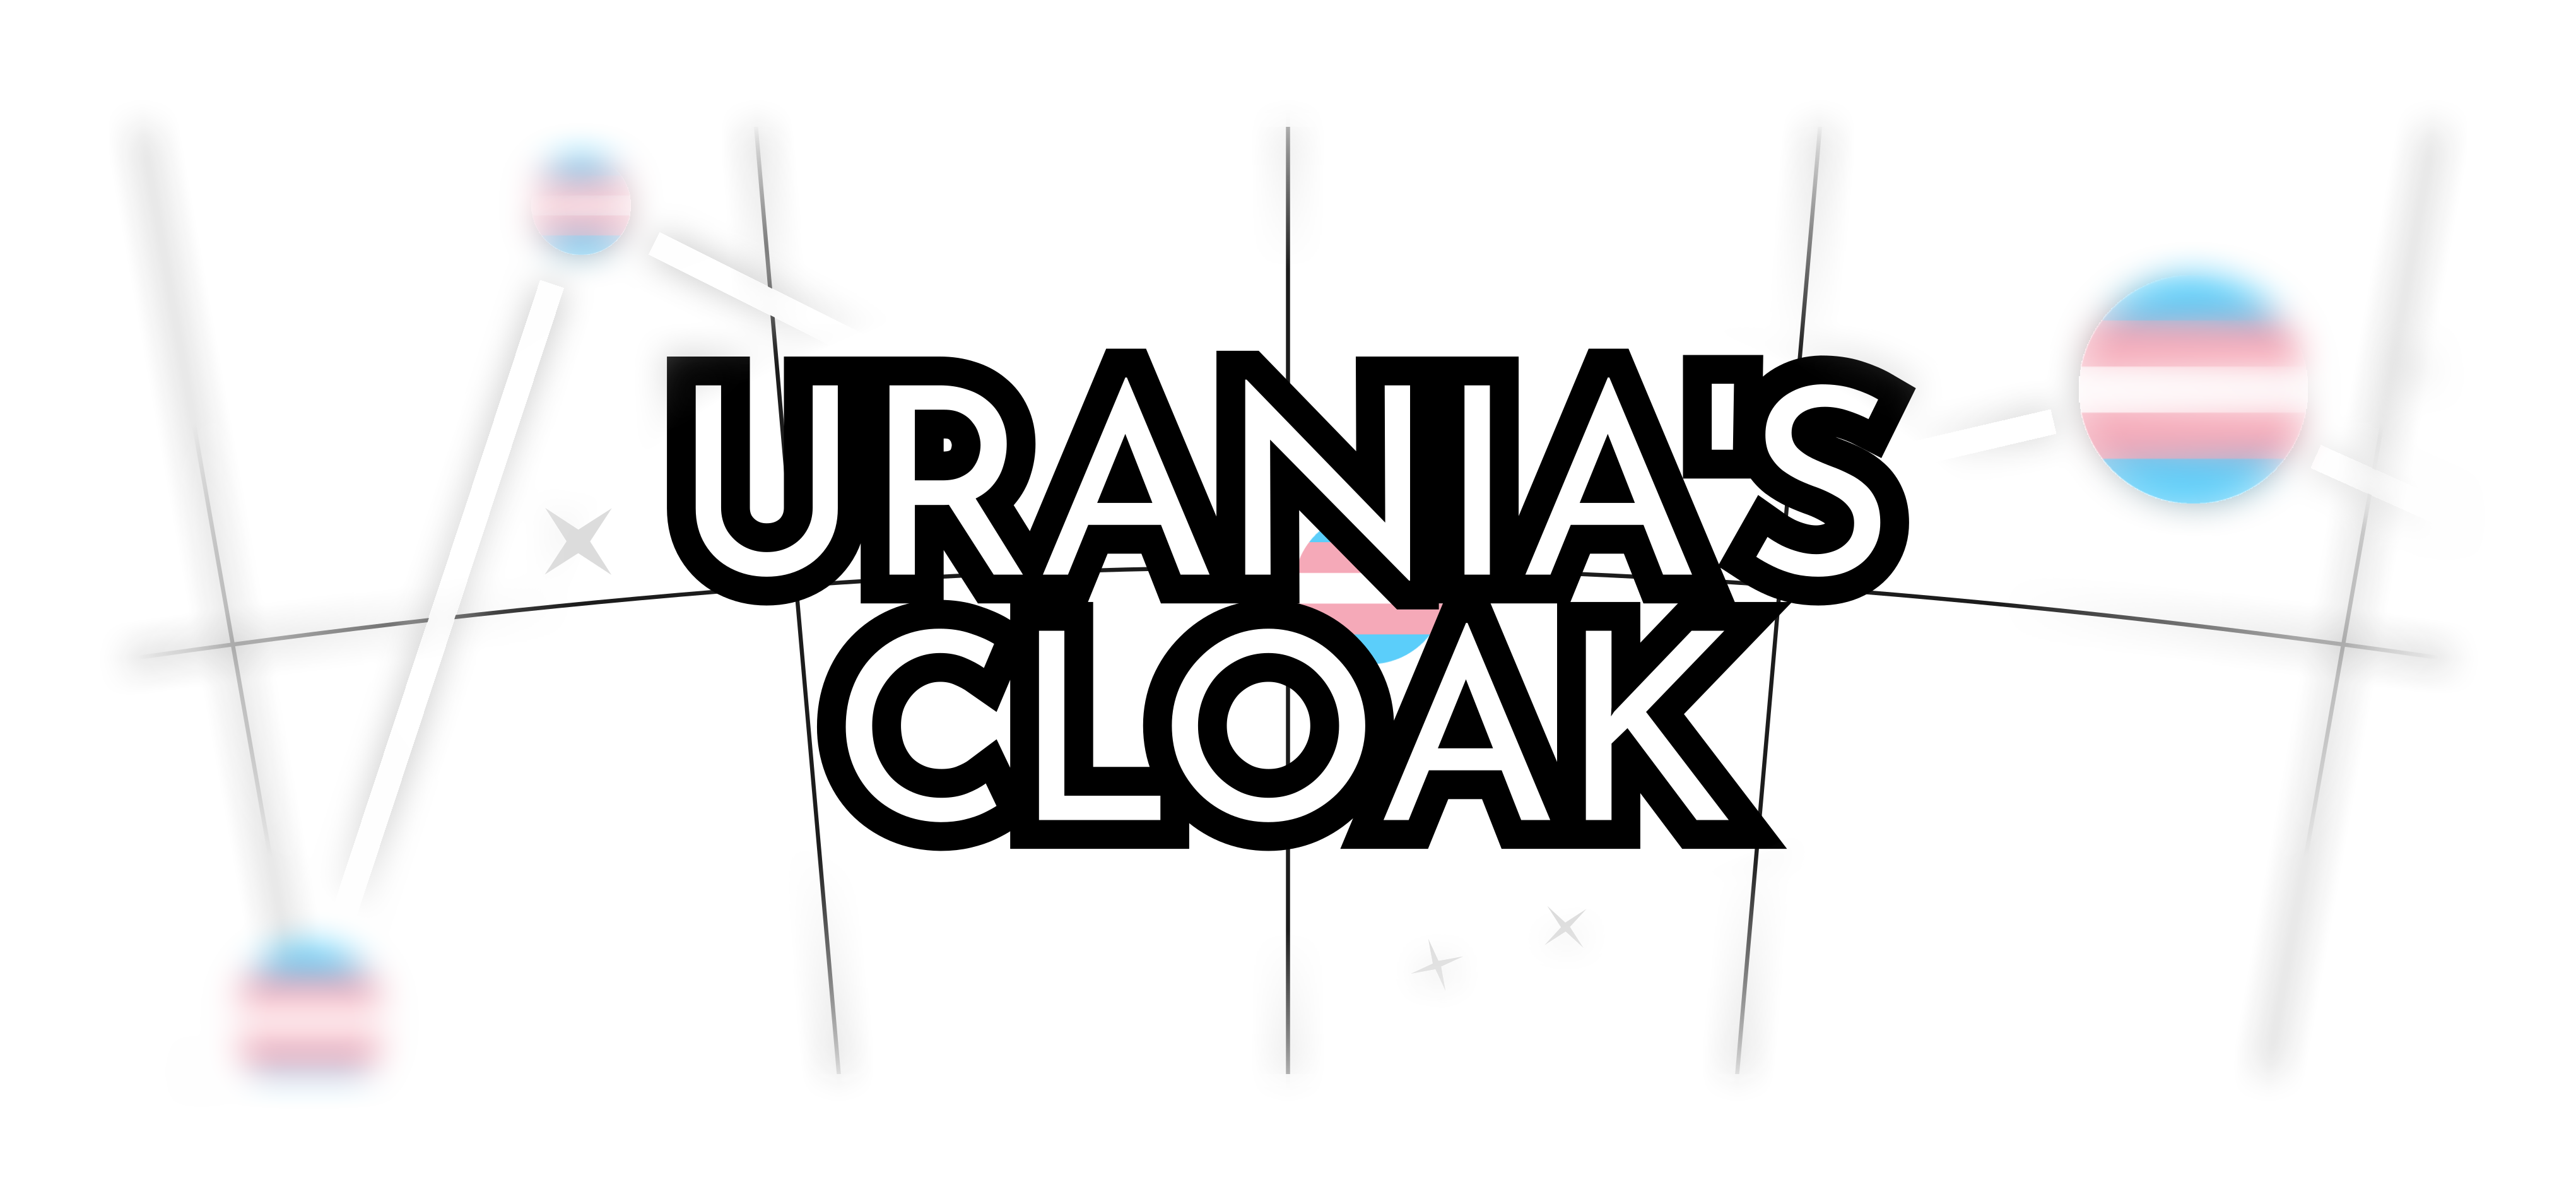 Urania's Cloak